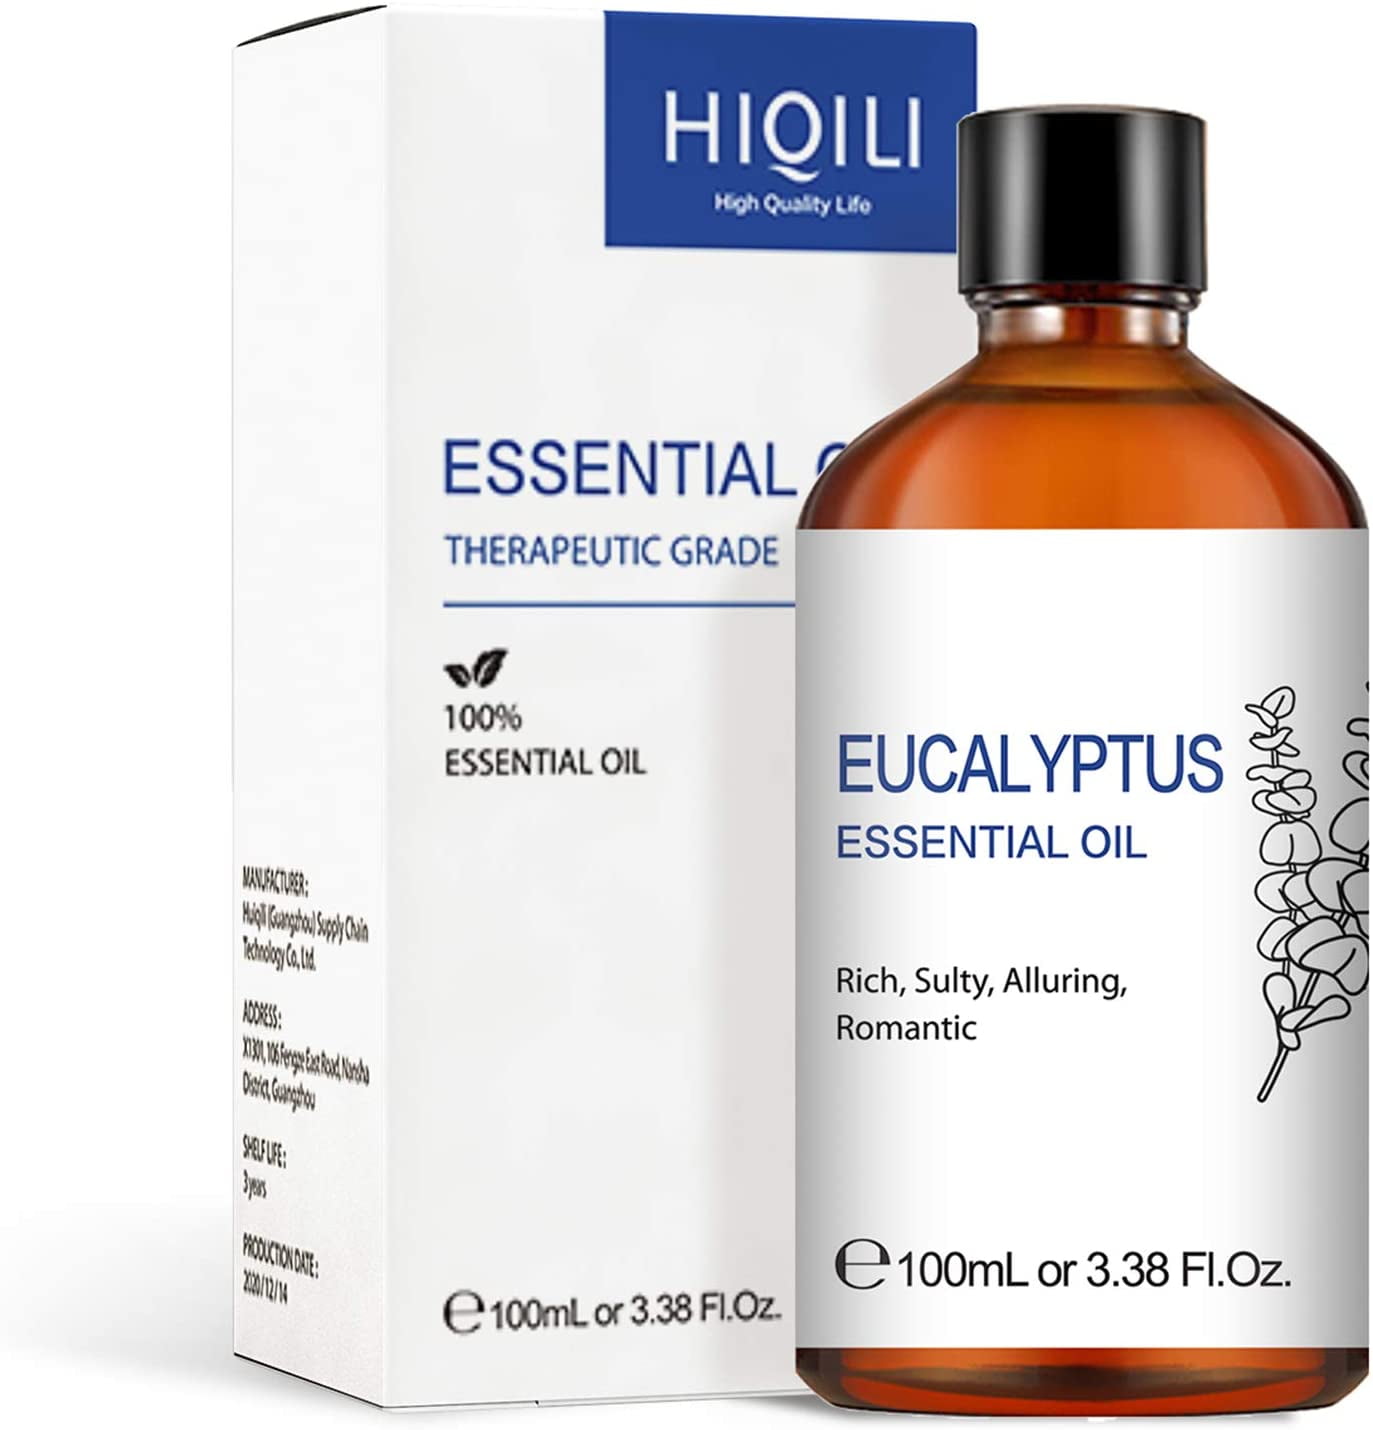 Shop Hiqli Essential Oil online